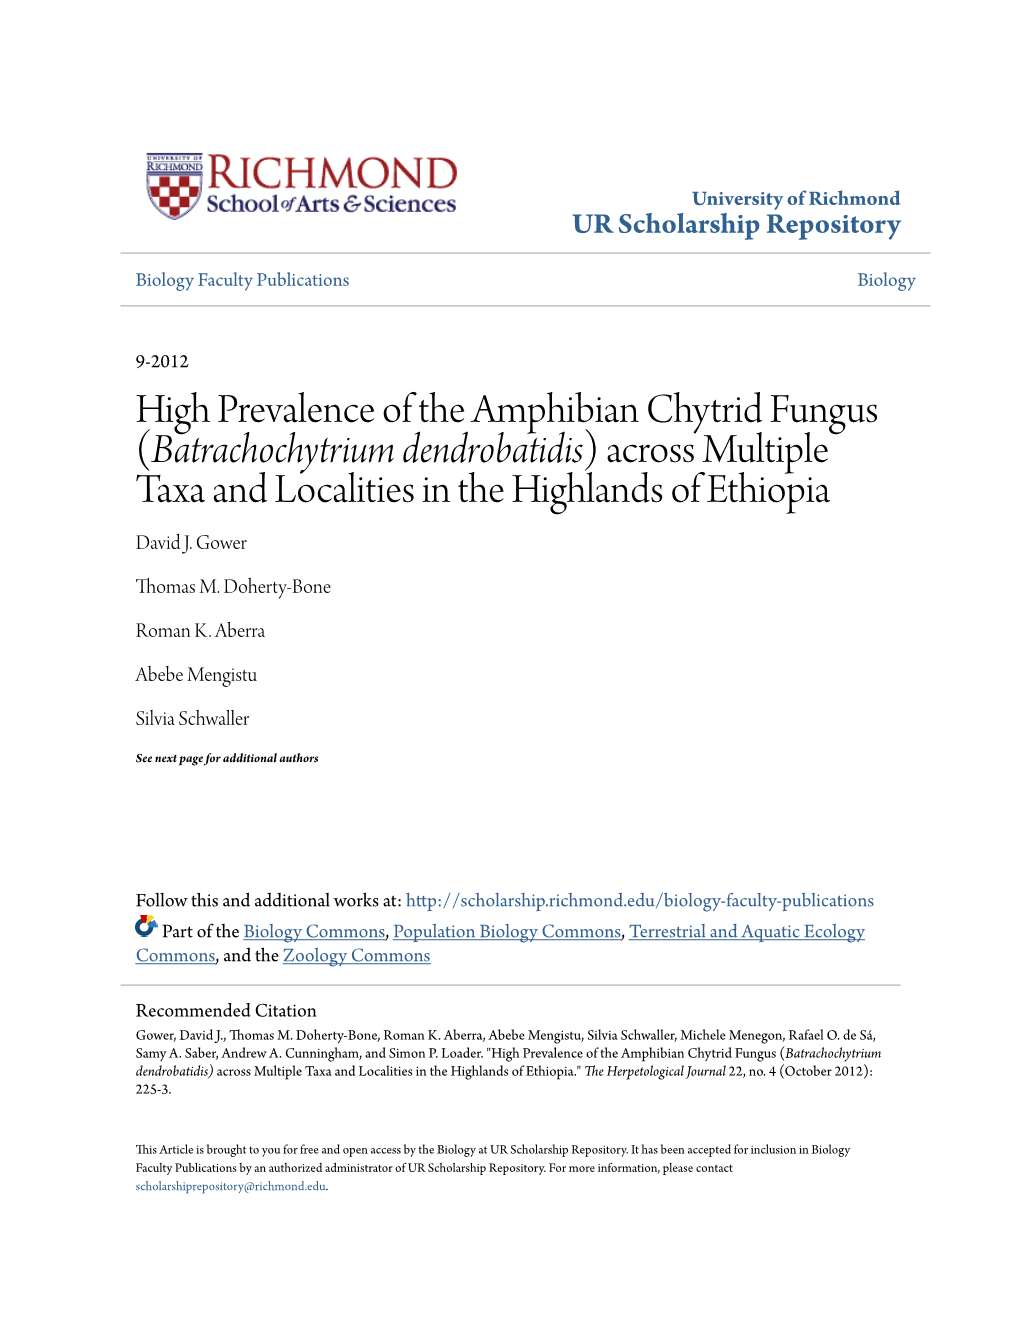 High Prevalence of the Amphibian Chytrid Fungus (Batrachochytrium Dendrobatidis) Across Multiple Taxa and Localities in the Highlands of Ethiopia David J